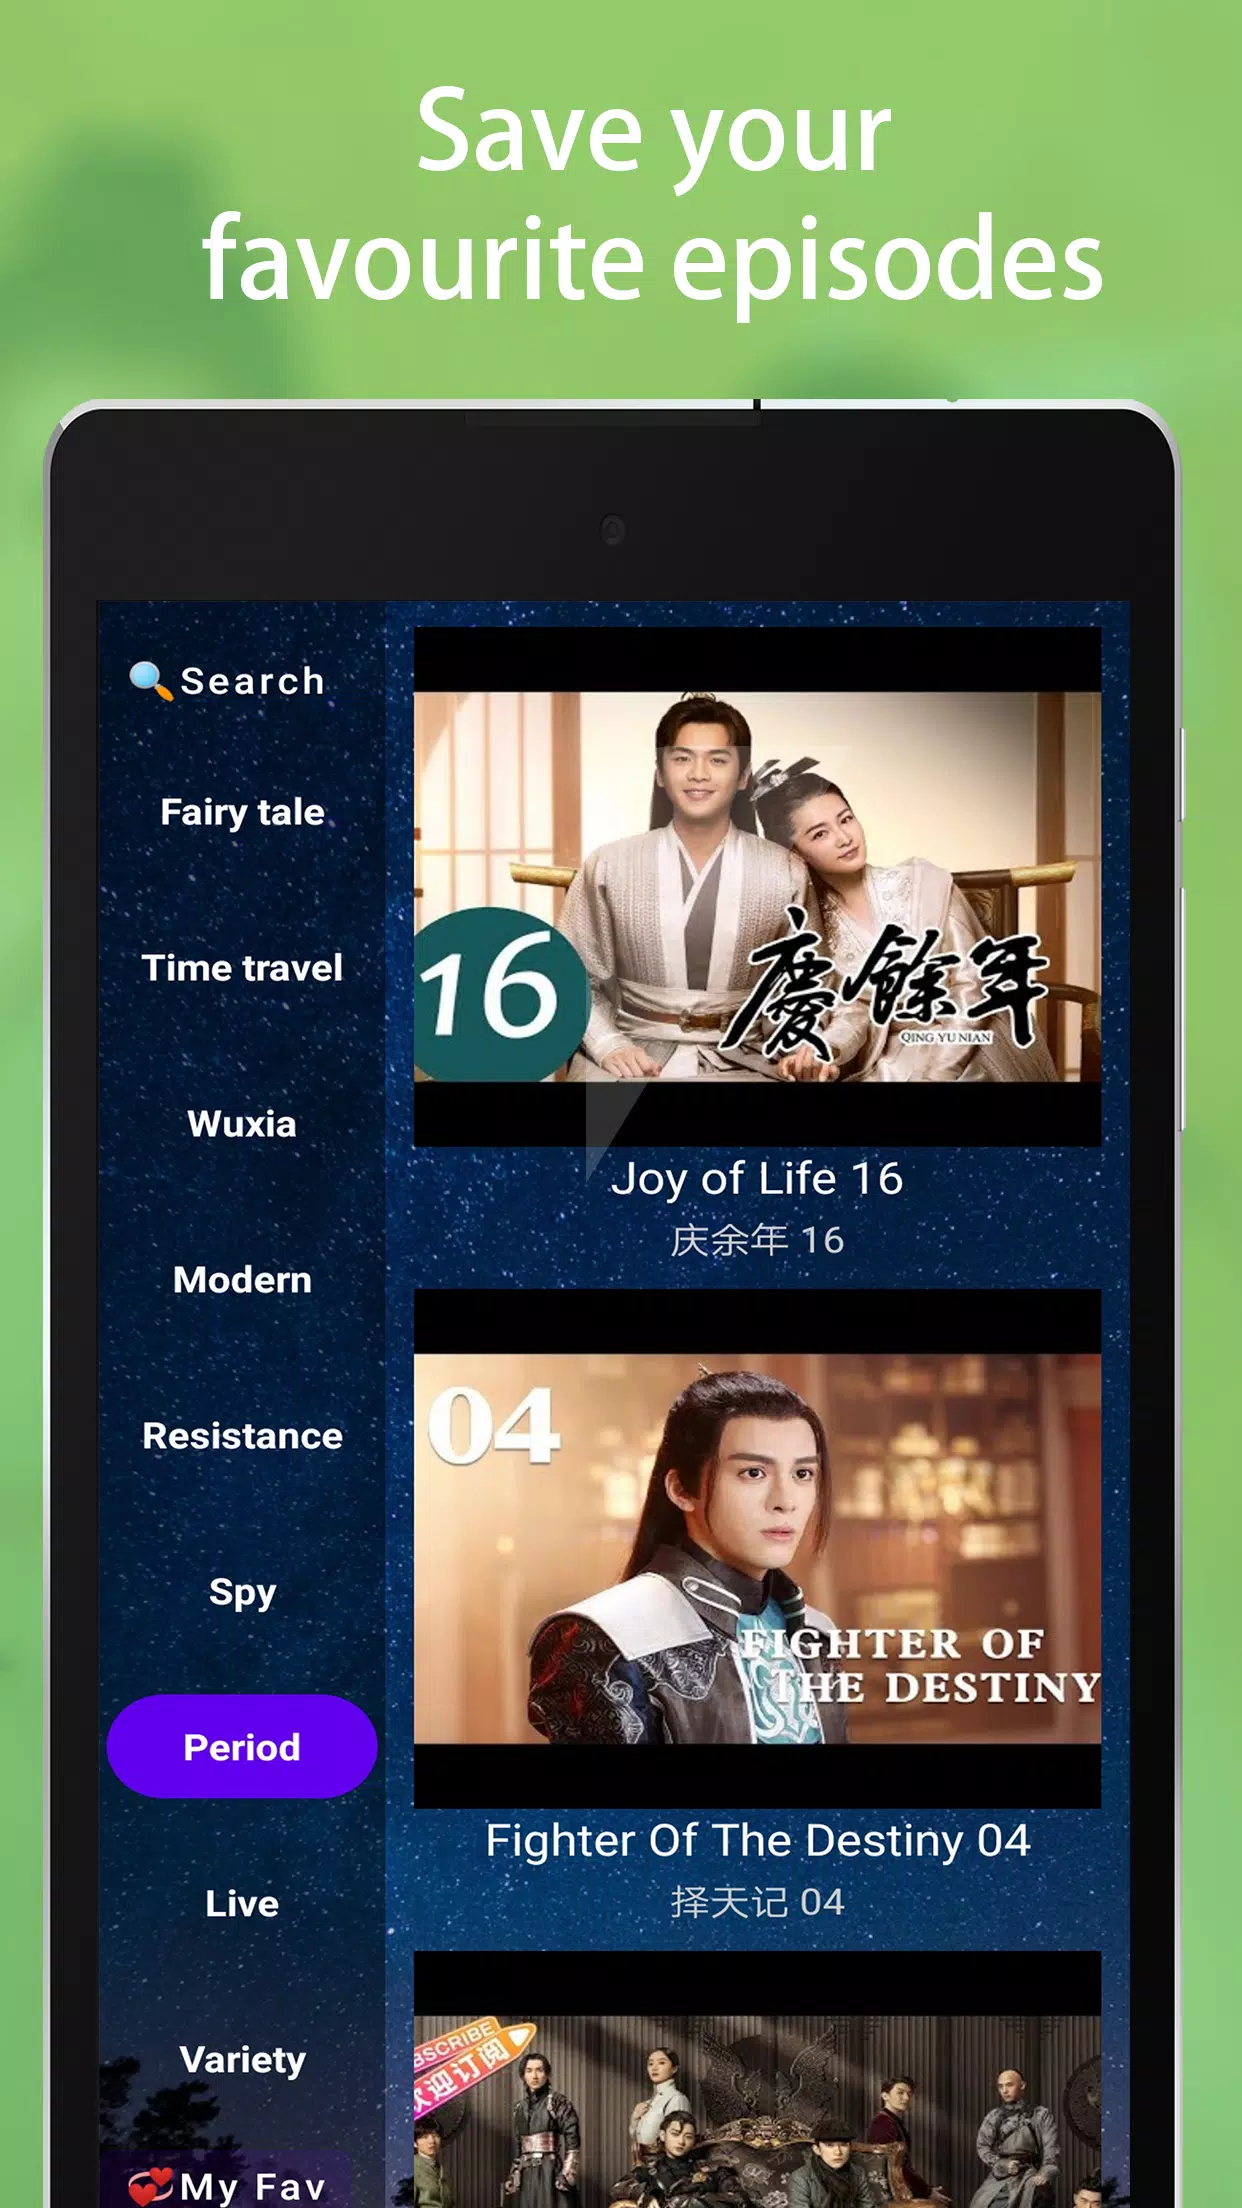 MyDramaList - Asian Drama DB - Apps on Google Play